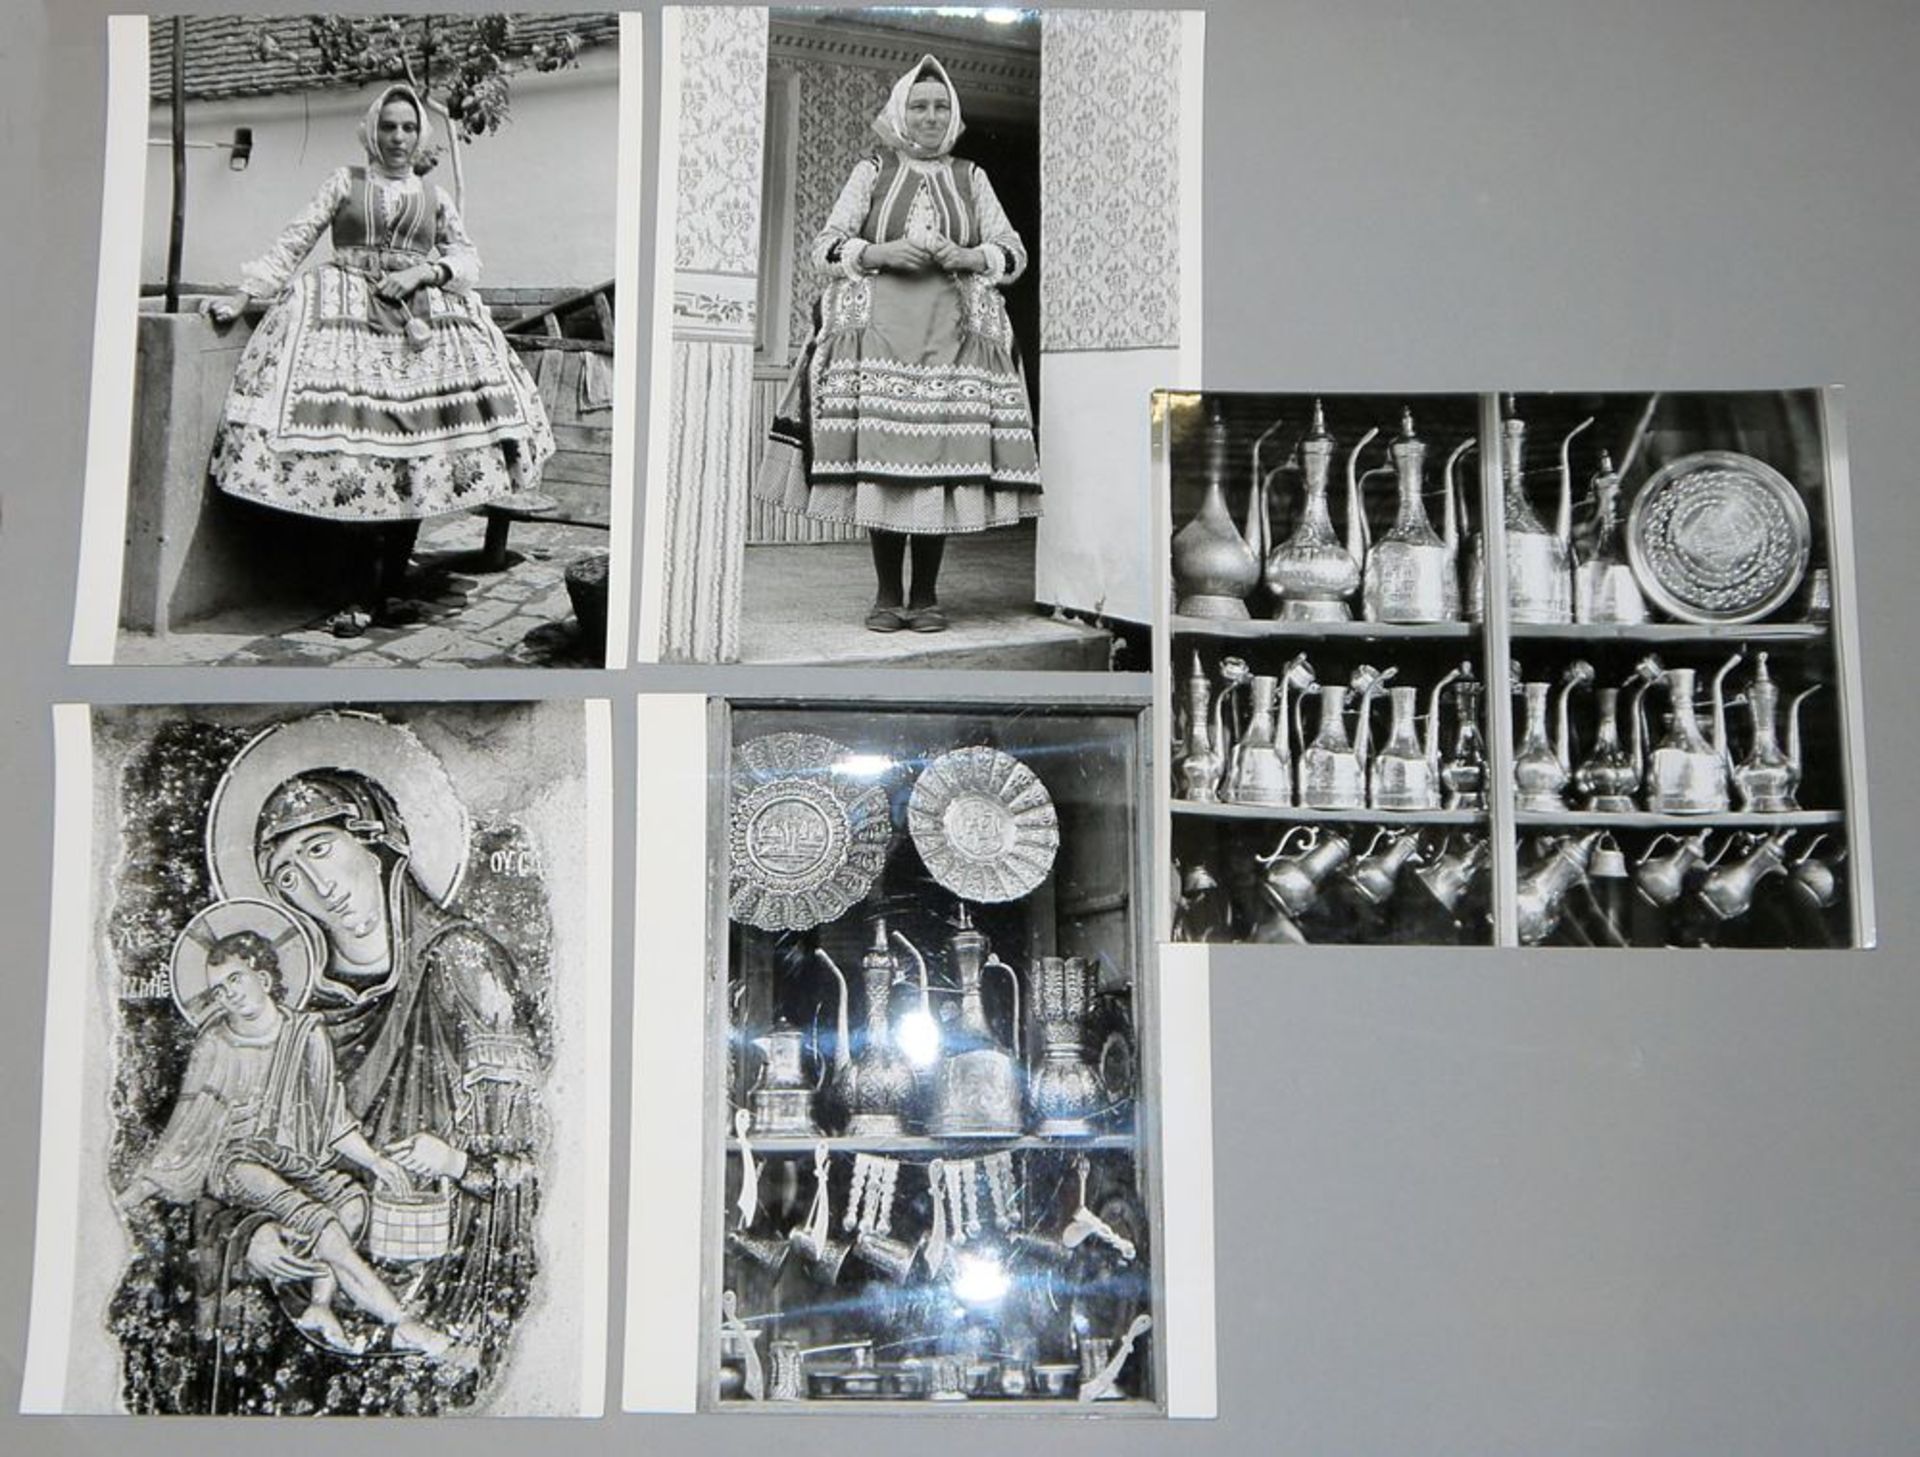 Toni Schneiders, Jugoslawien: Frauen in Tracht, Ware eines Kupferschmieds im Fenster, Fresco, 5 s/